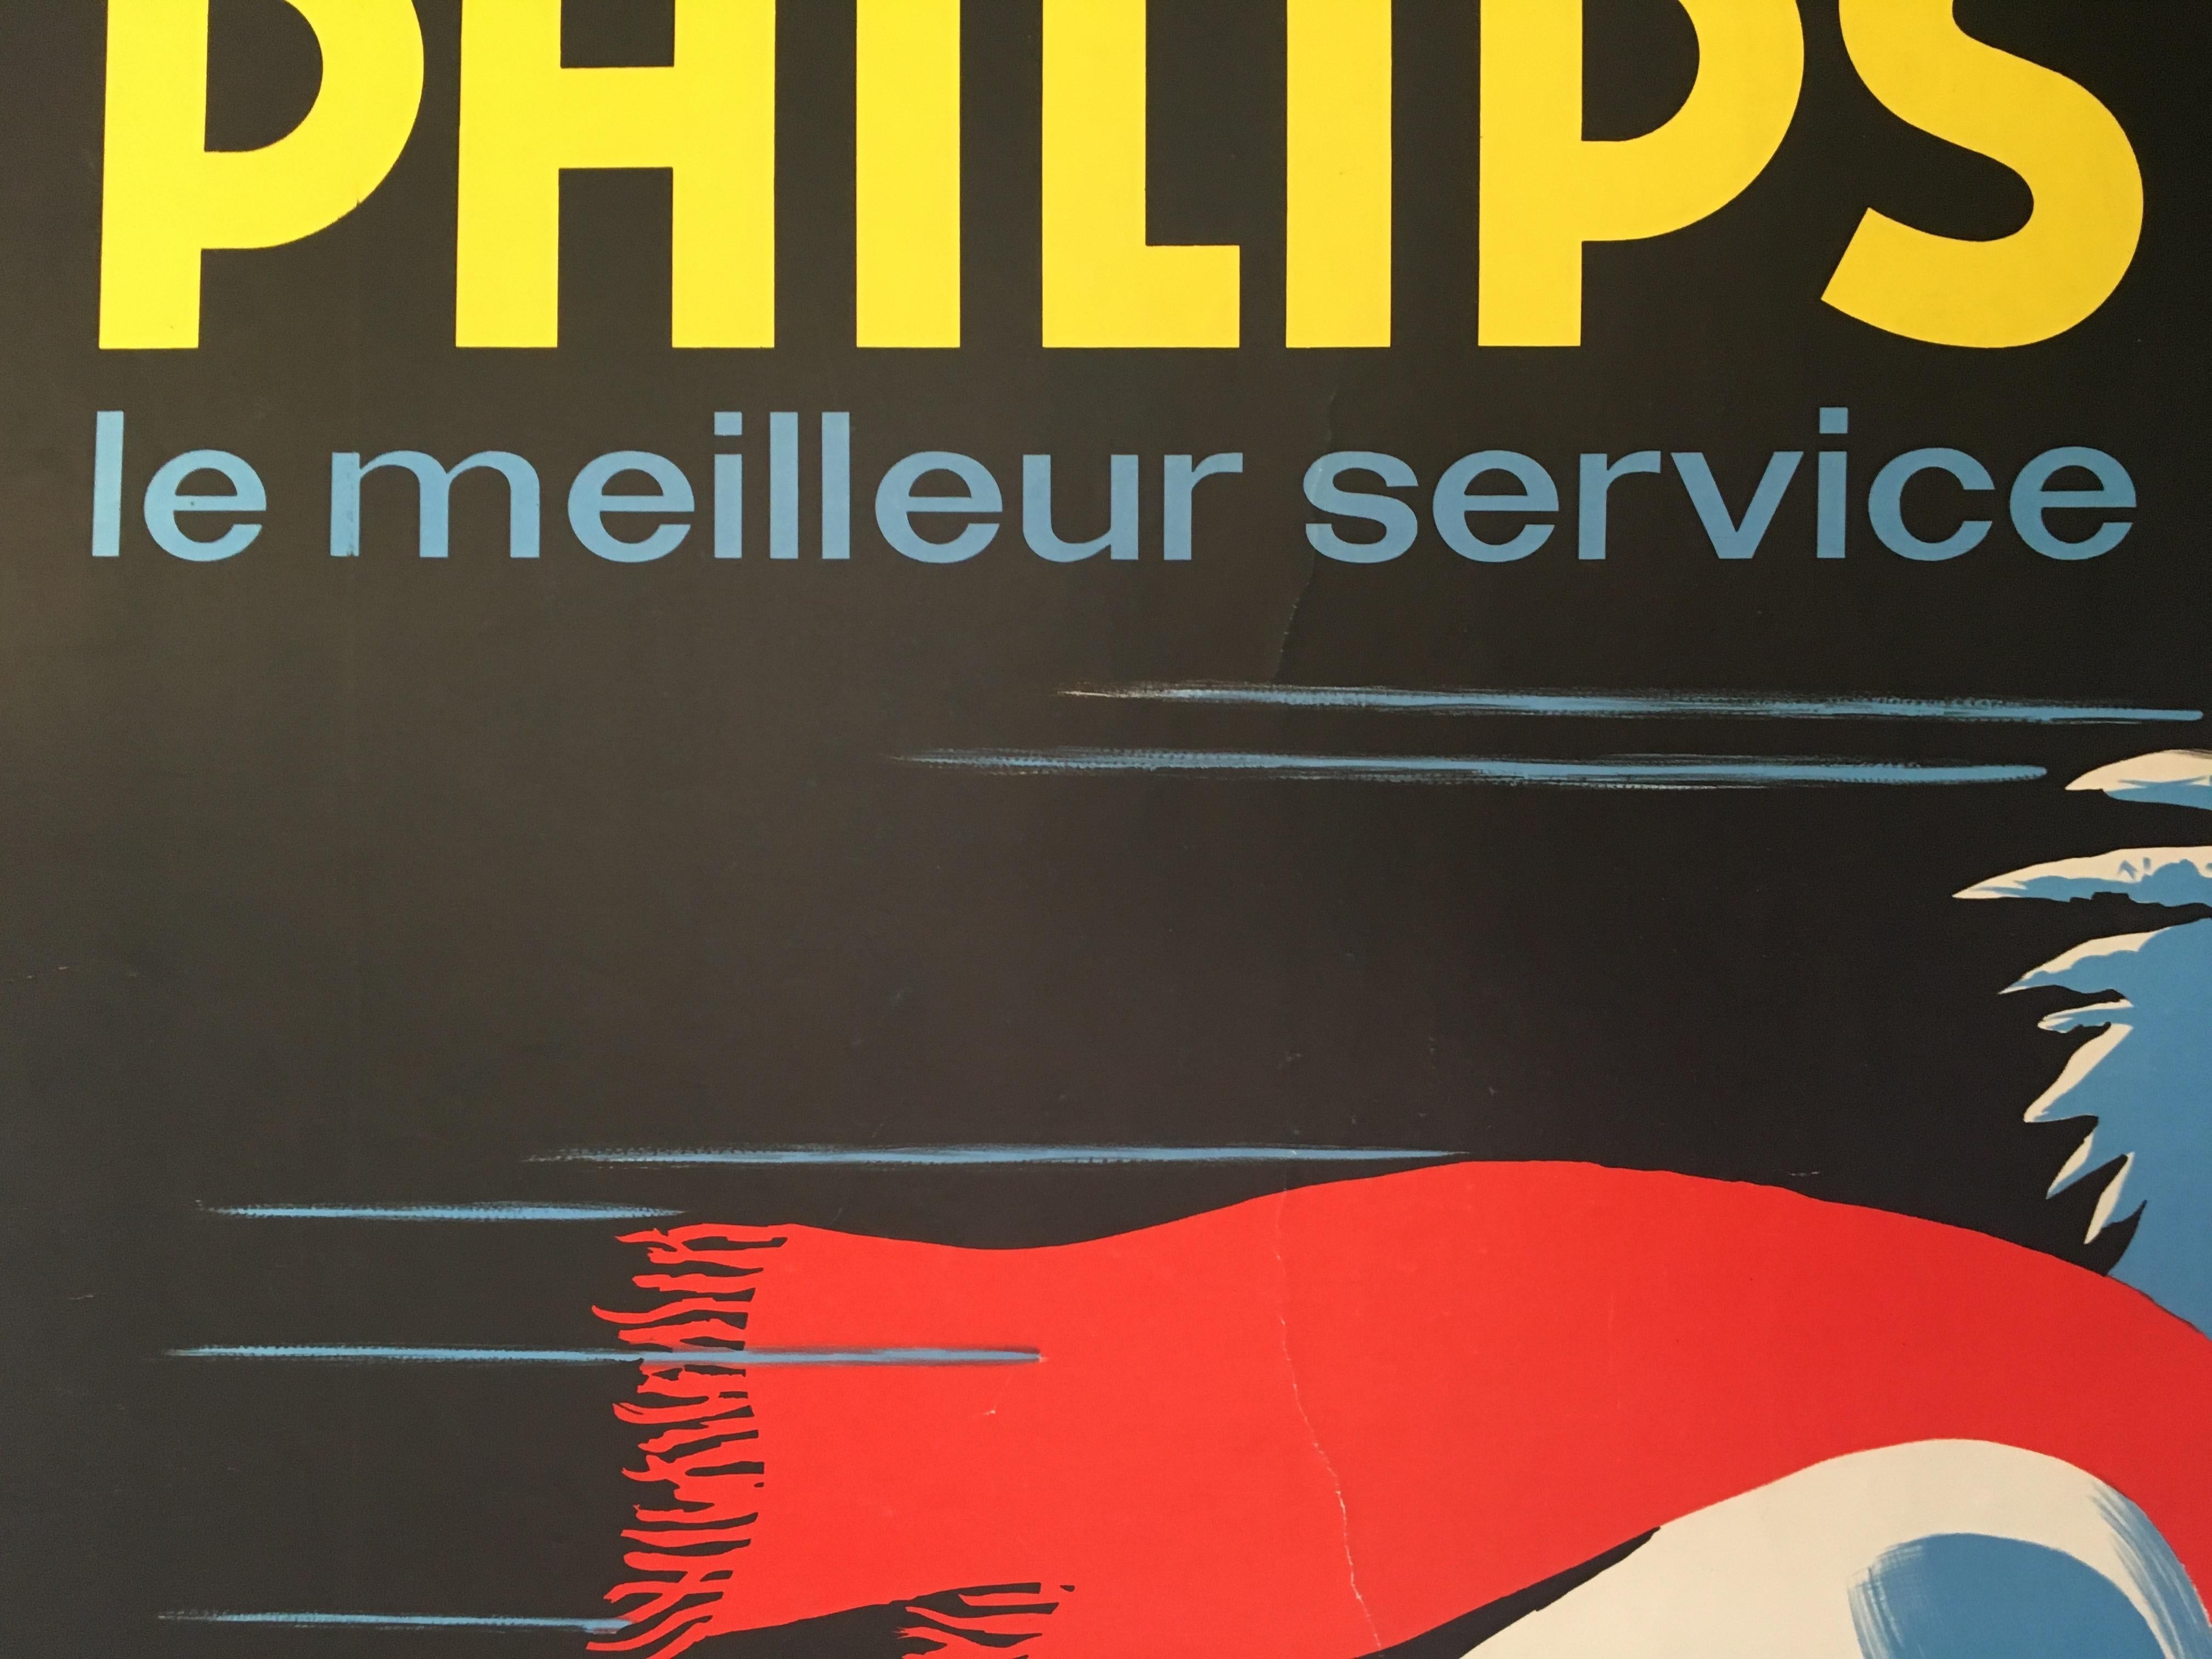 Midcentury original vintage French poster, 'Froid Philips' by Darigo 

Artist
Darigo

Year 
1950

Dimensions:
160 x 120 cm

Format
Linen backed.
  